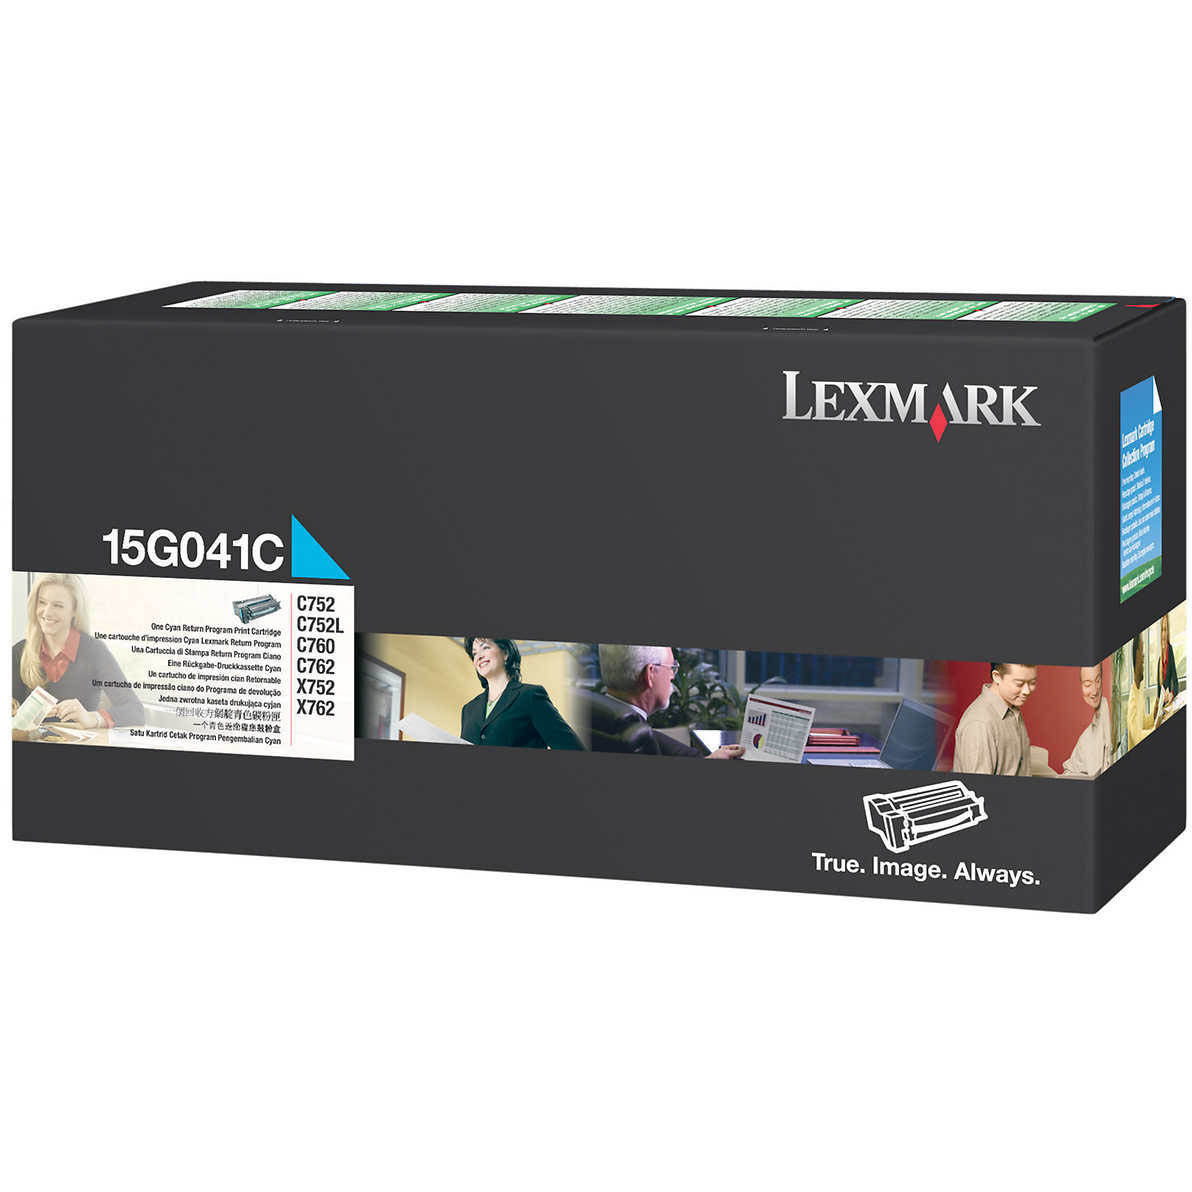 Original Lexmark 15G041C Cyan Toner Cartridge (15G041C)